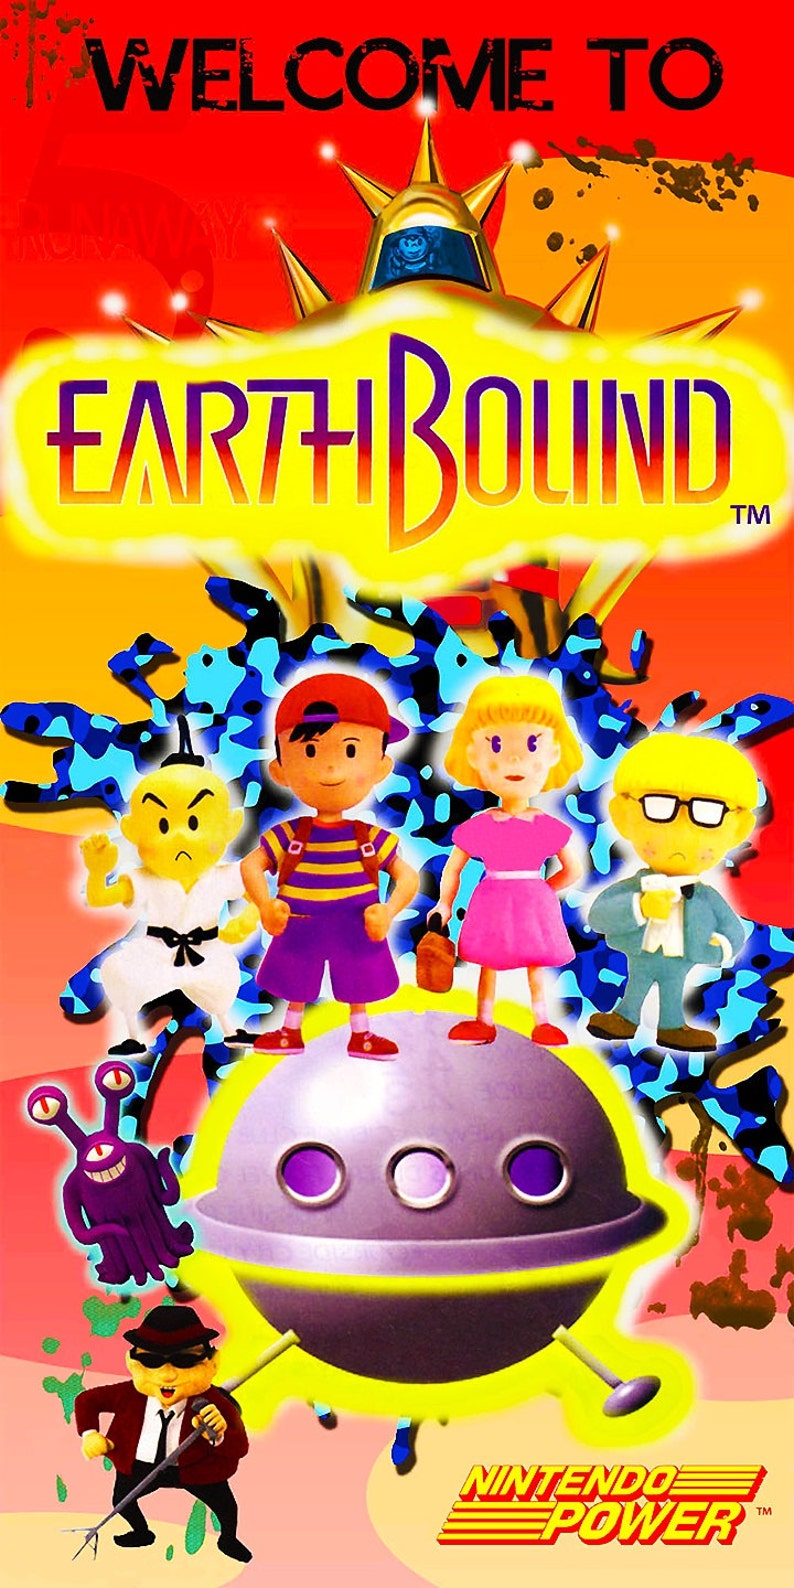 Nintendo Power Earthbound 